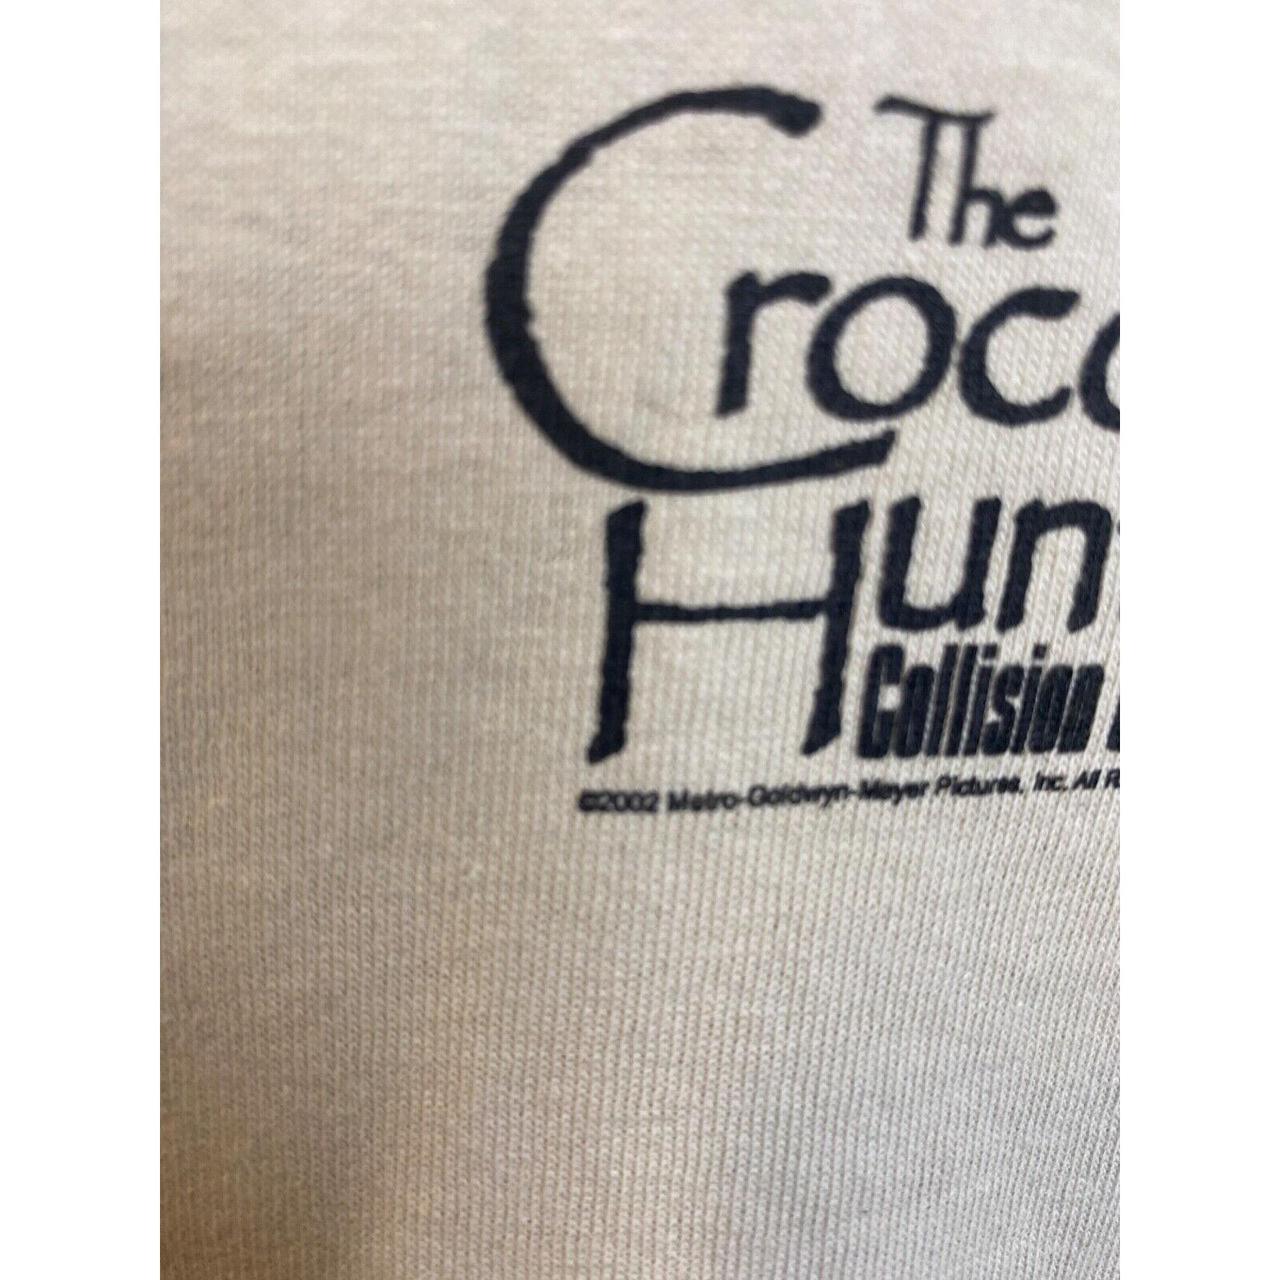 Hunter Men's T-shirt (3)